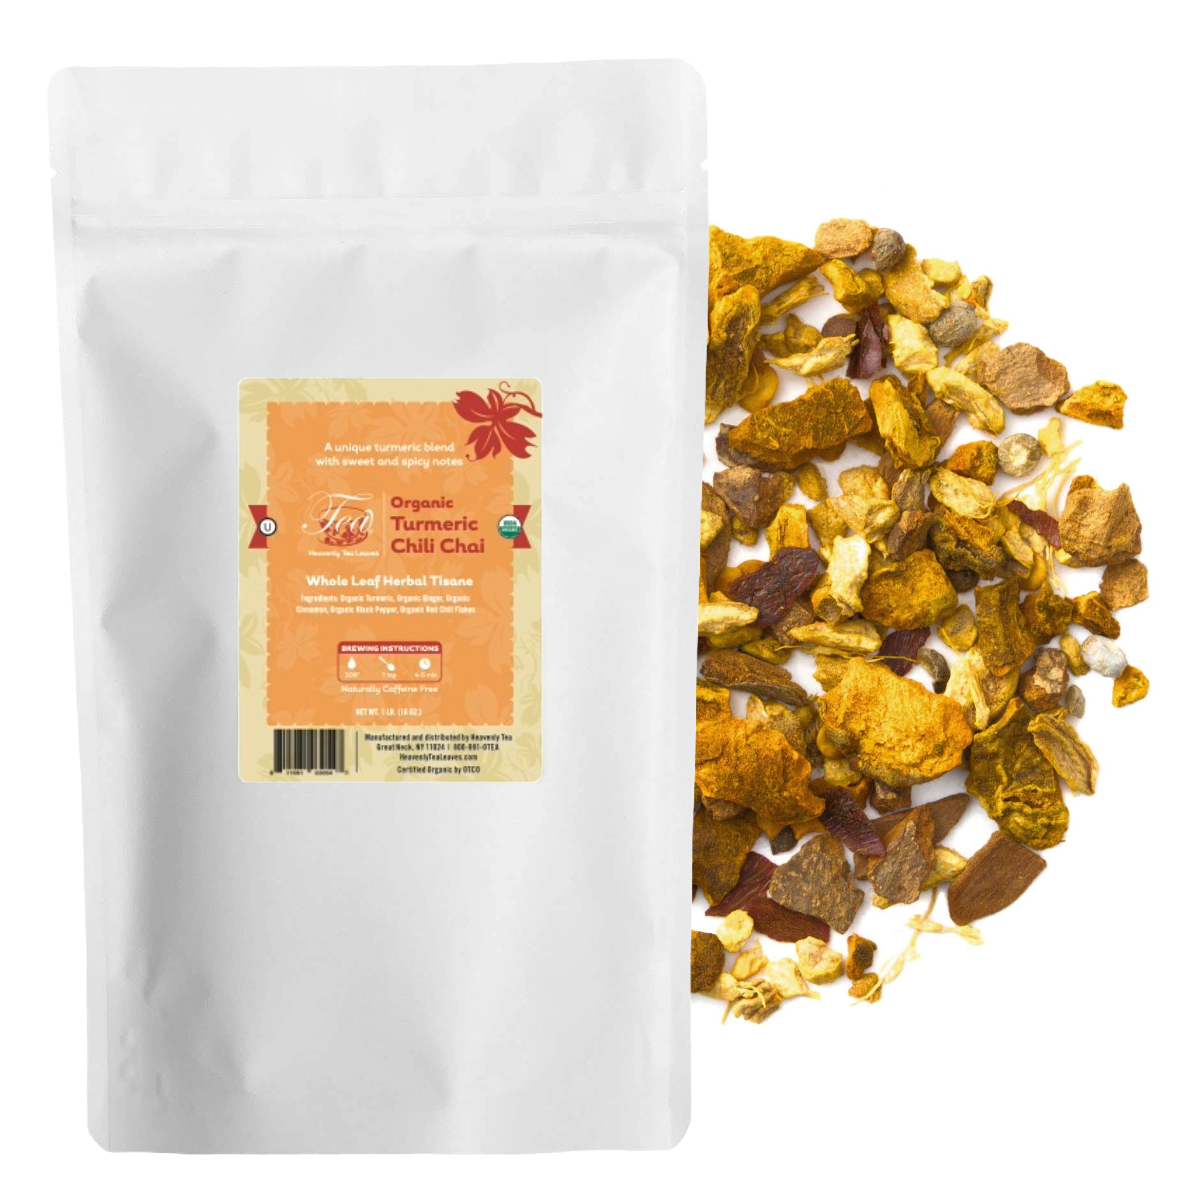 Organic Turmeric Chili Chai - Golden Milk Loose Leaf Tea - Spicy Bulk Turmeric Herbal Tisane | Heavenly Tea Leaves